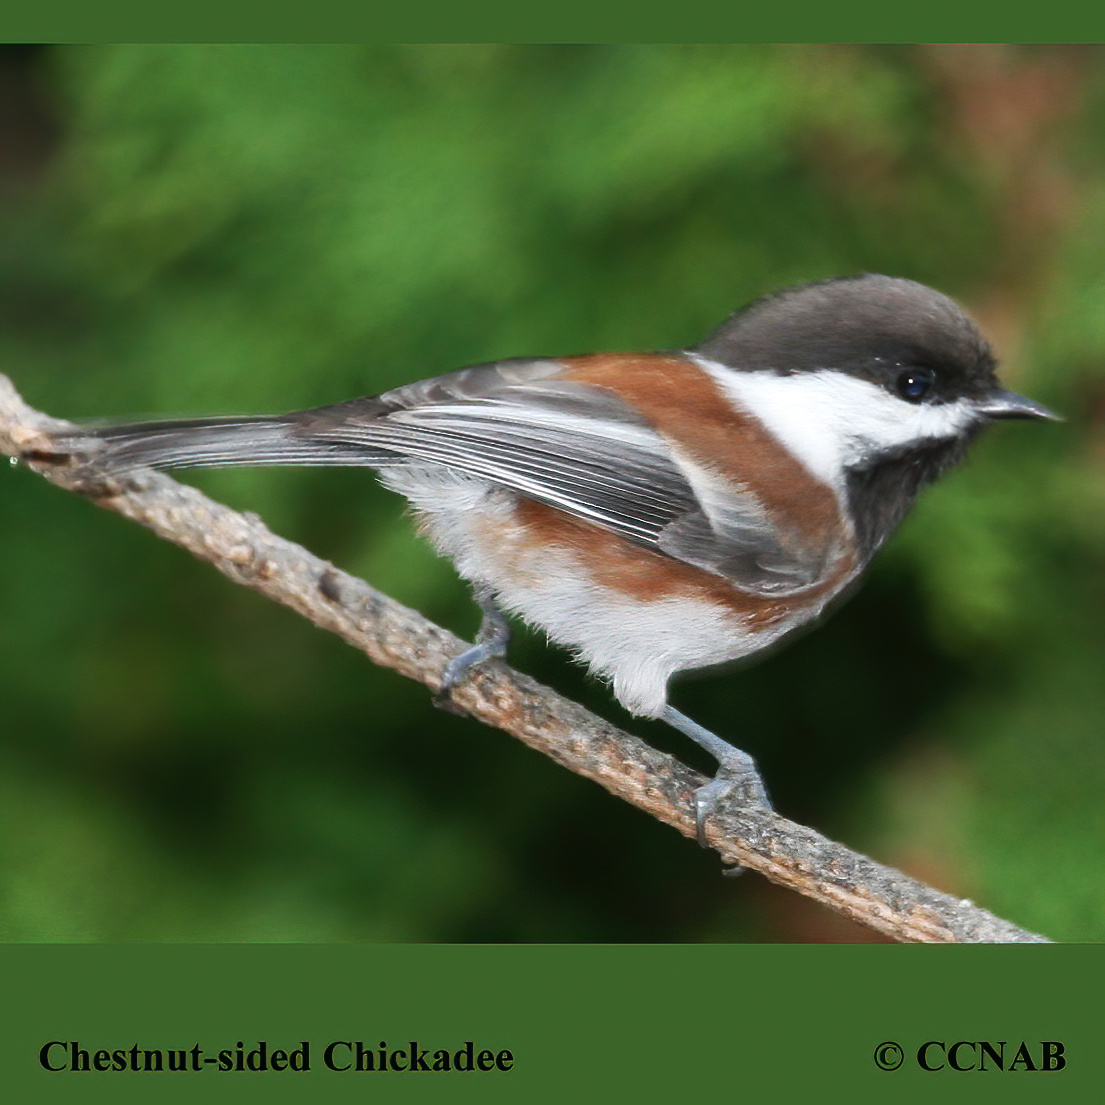 Chestnut-backed Chickadee